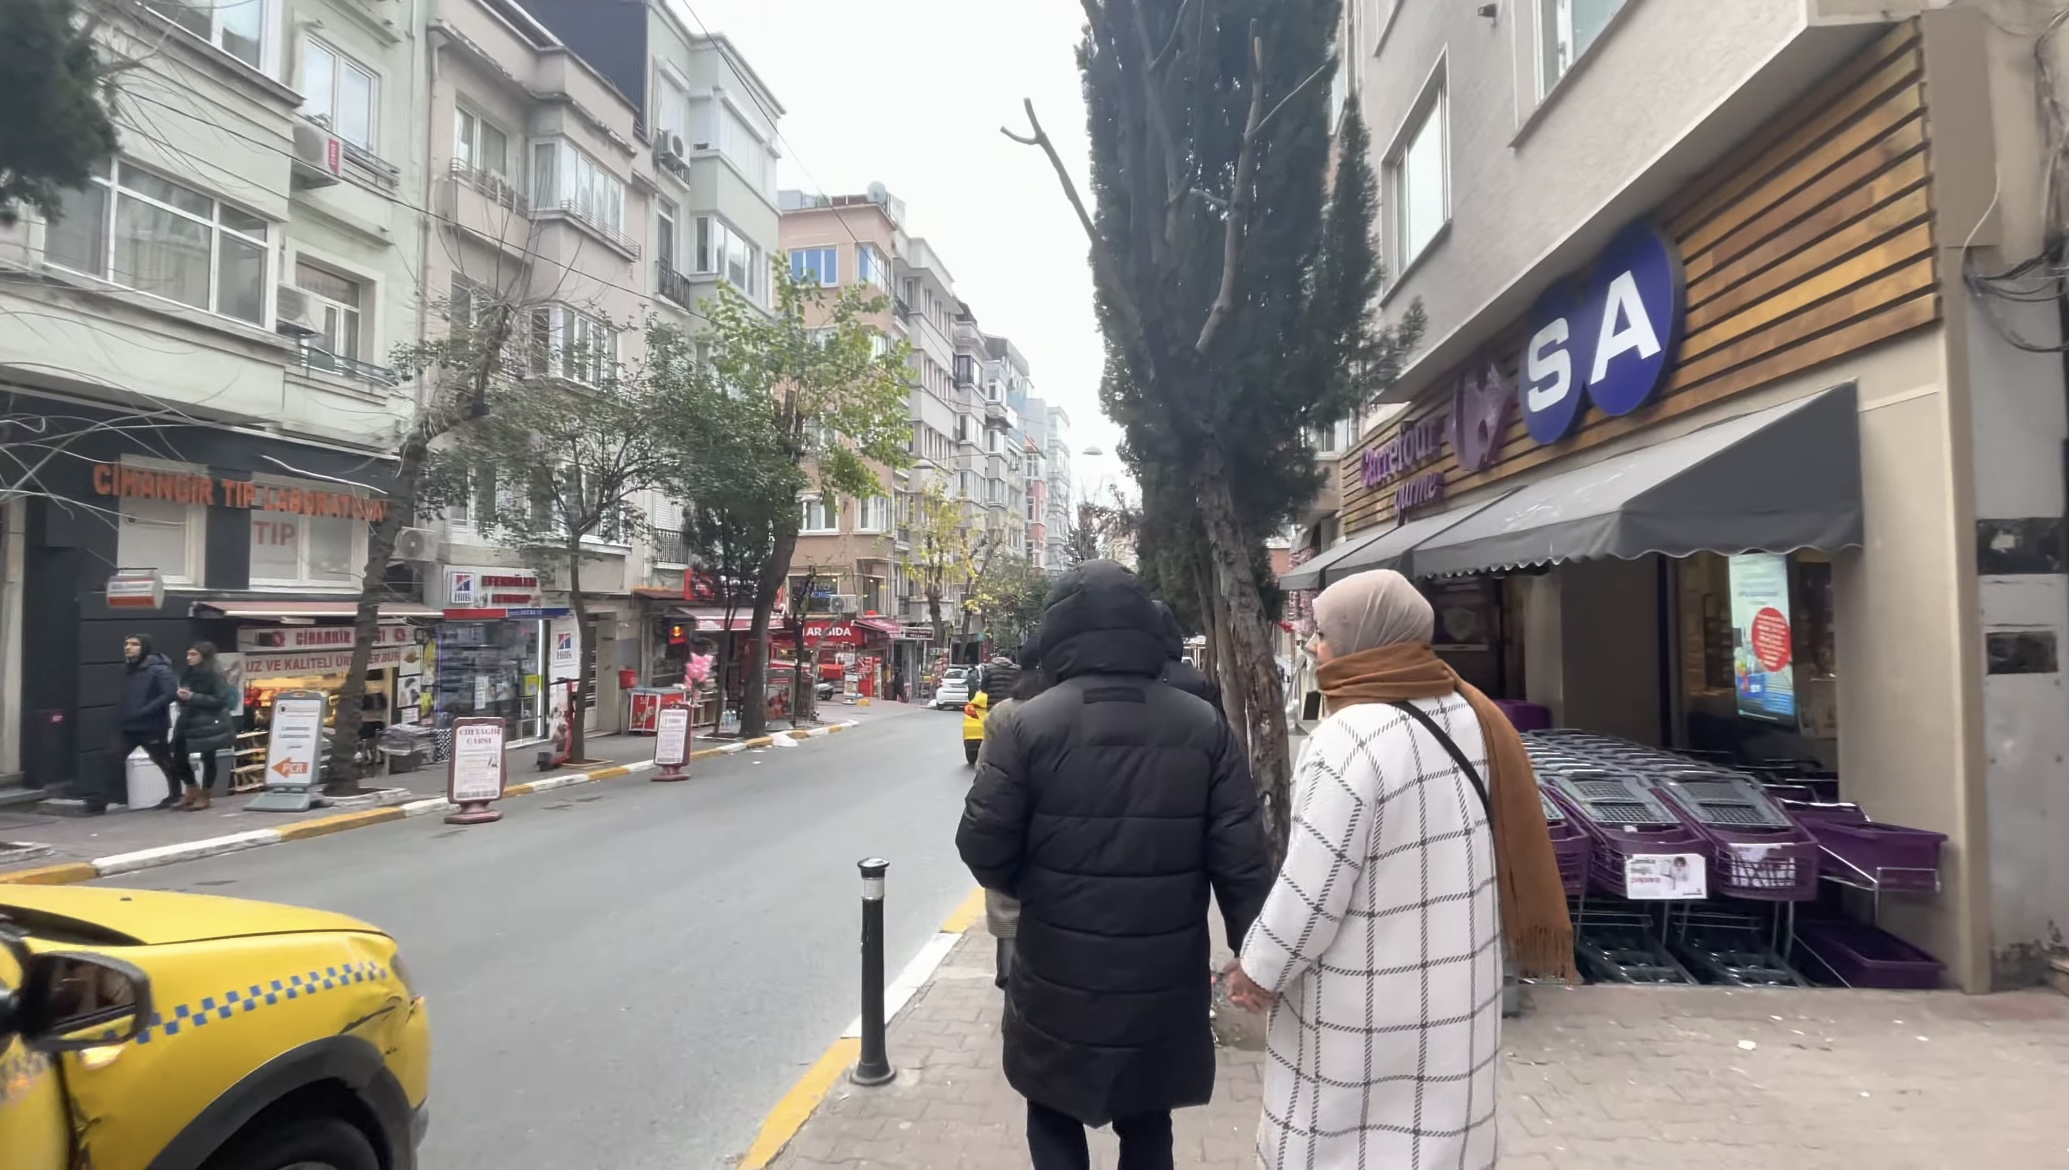 A couple walking the main street of Cihangir Neighborhood in the morning